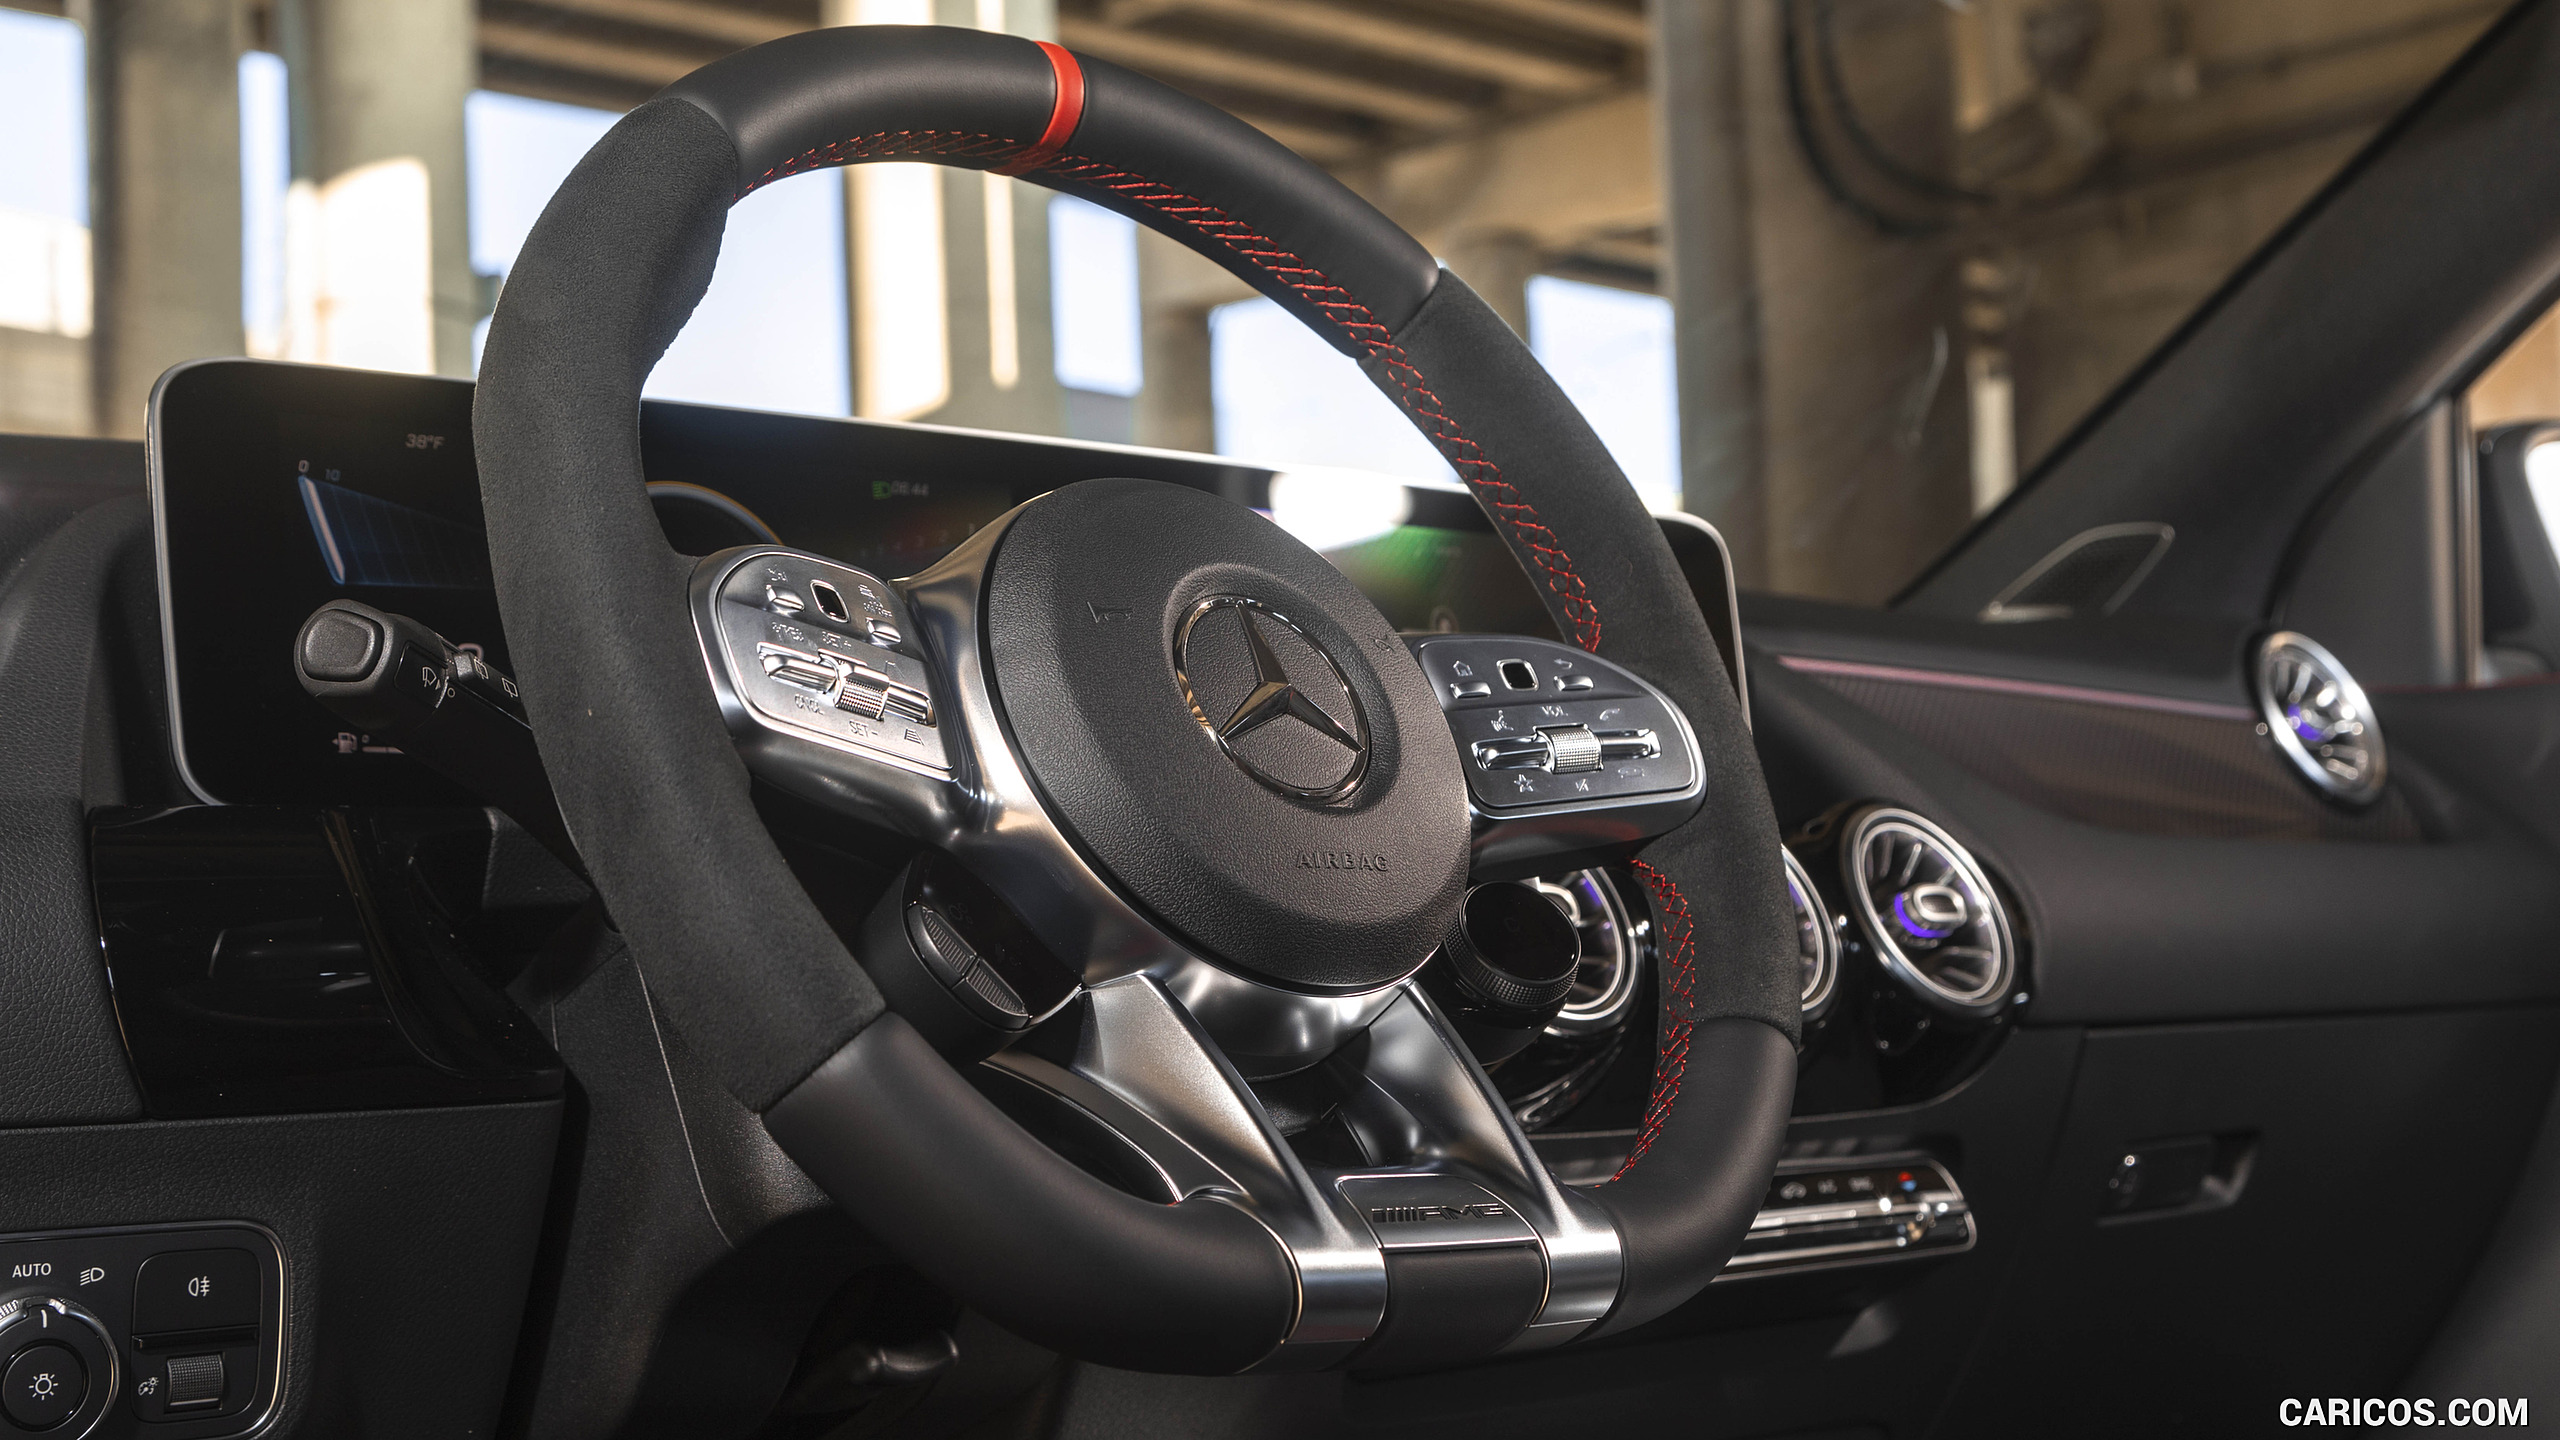 2021 Mercedes-AMG GLA 45 - Interior, Steering Wheel, #90 of 97